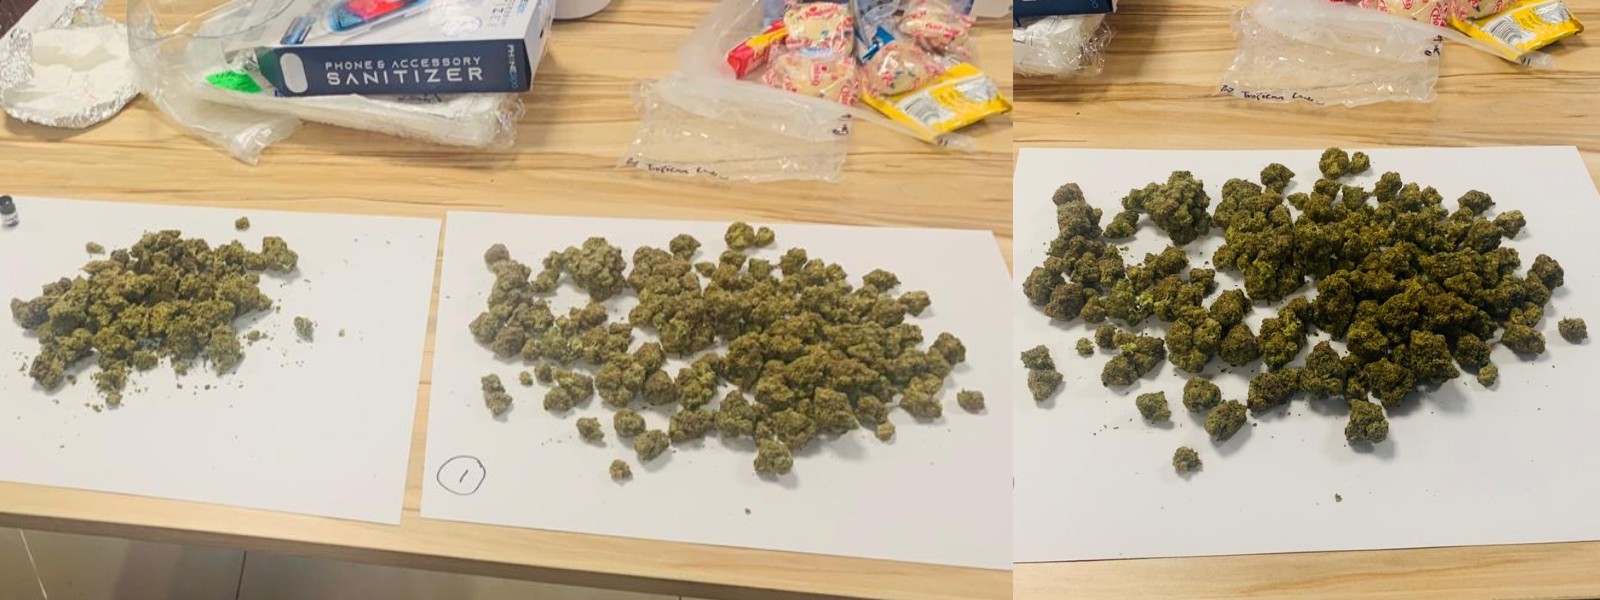 Kush Cannabis worth Rs. 2.2 Mn seized in Katunayake